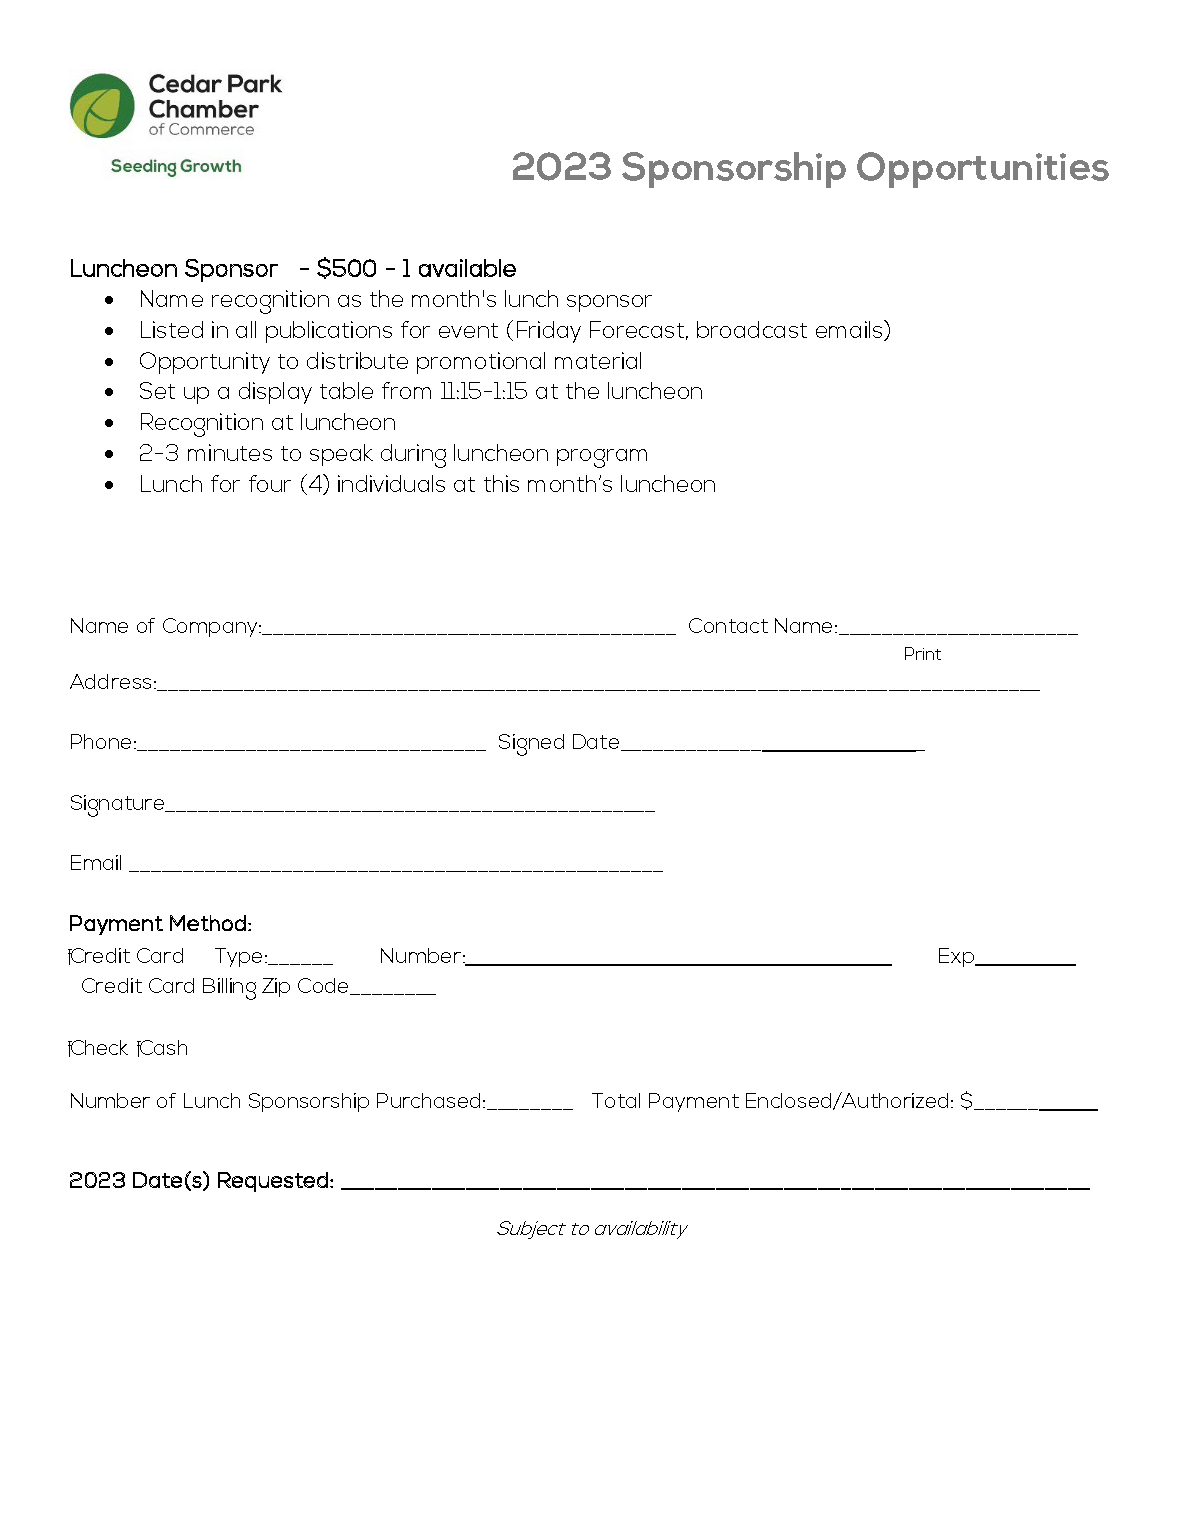 2023 Luncheon Sponsorship Form